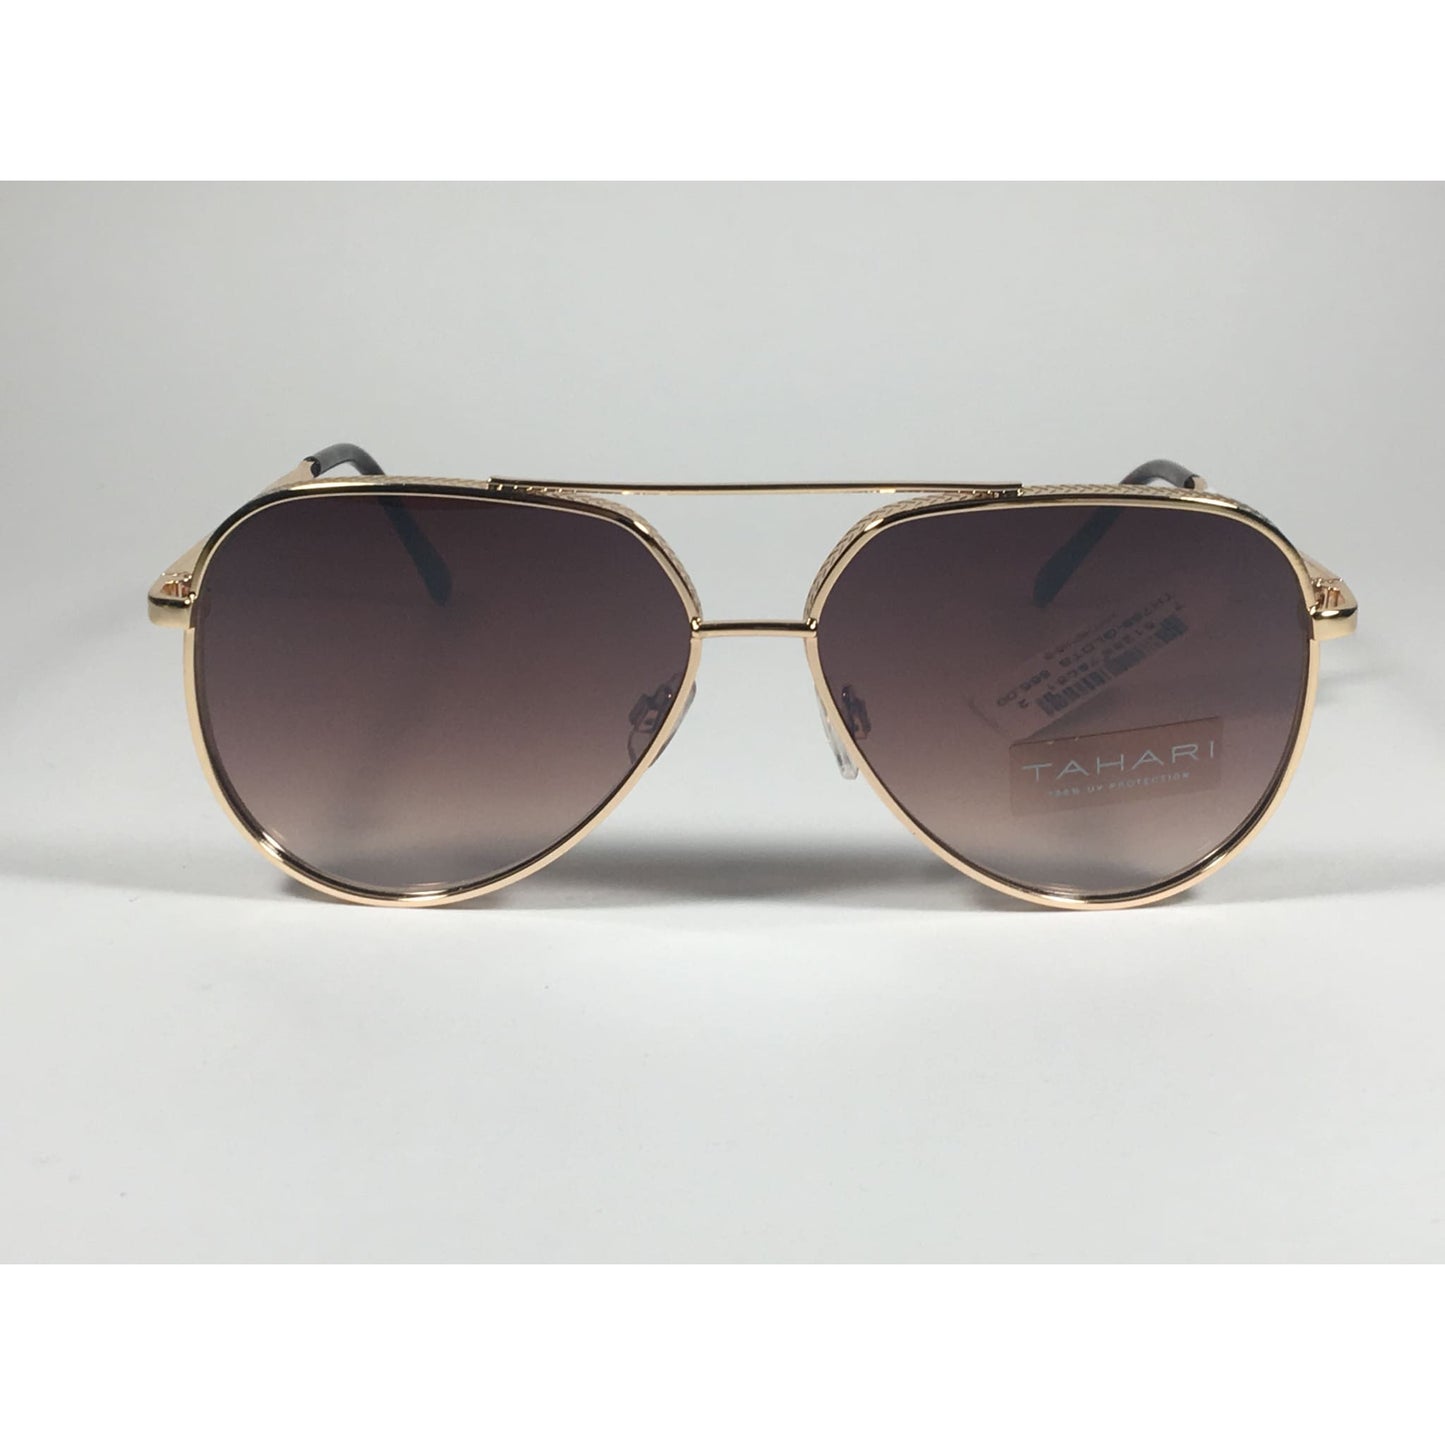 Tahari Aviator Sunglasses Gold Brown Tortoise Frame Gradient Lens TH758 GLDTS - Sunglasses